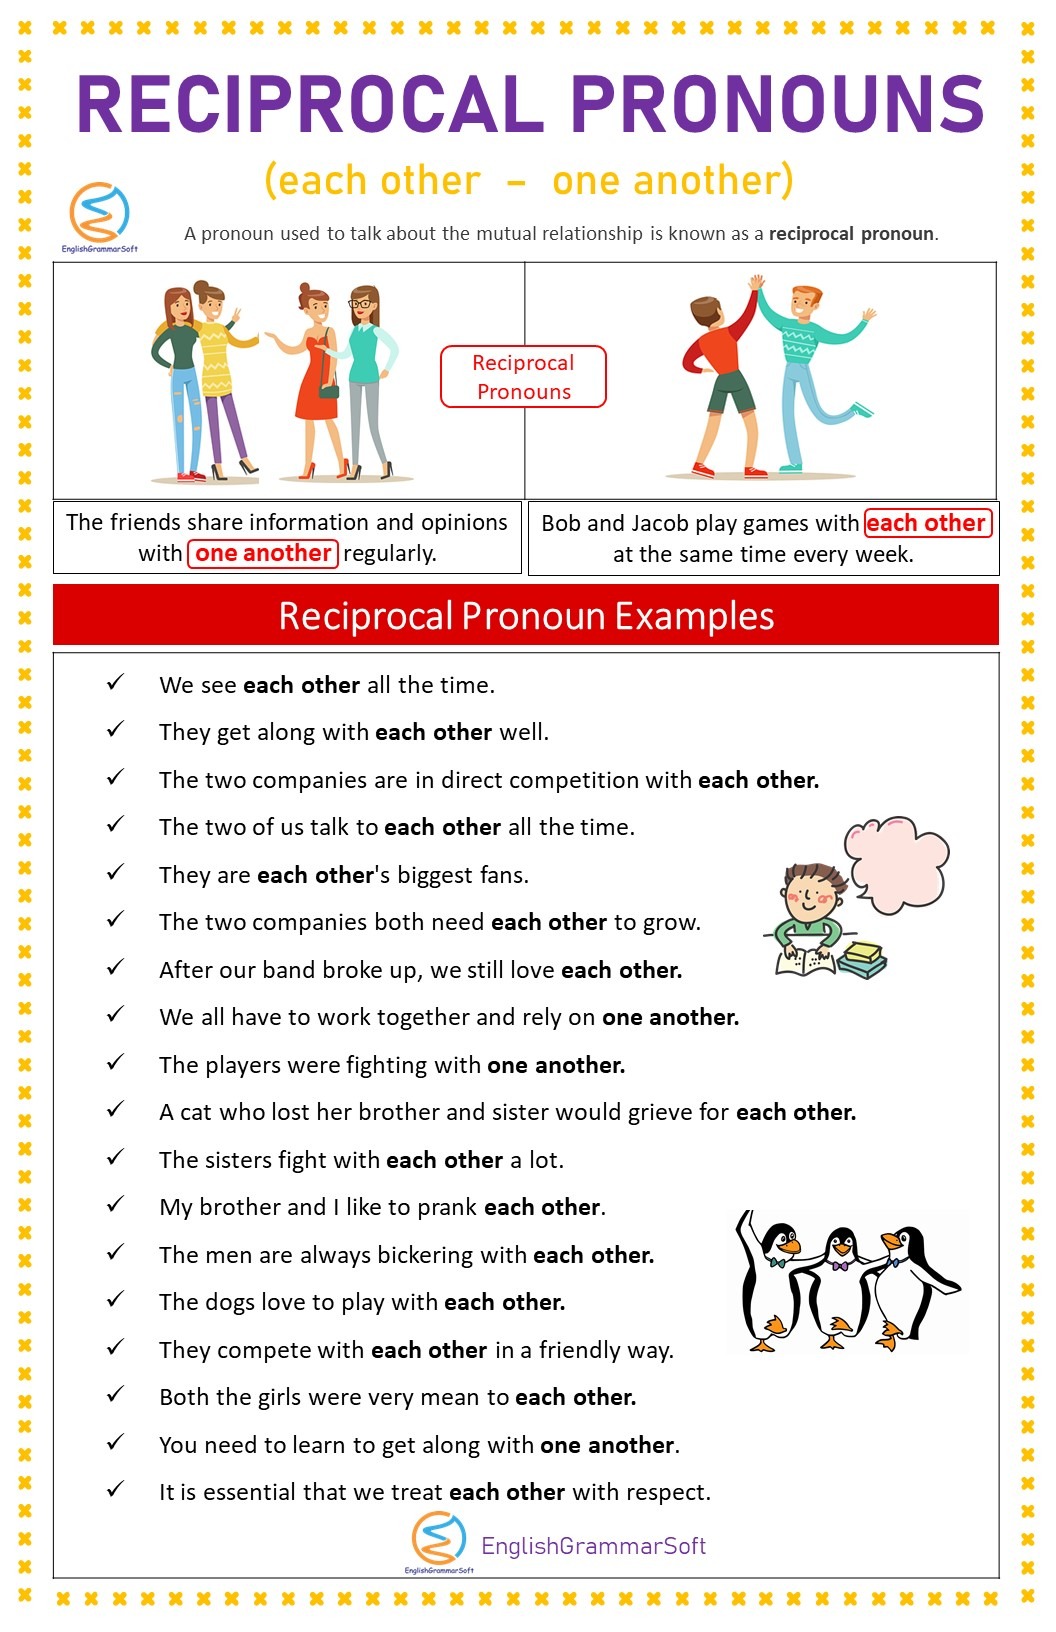 Reciprocal Pronouns Exercise & Examples